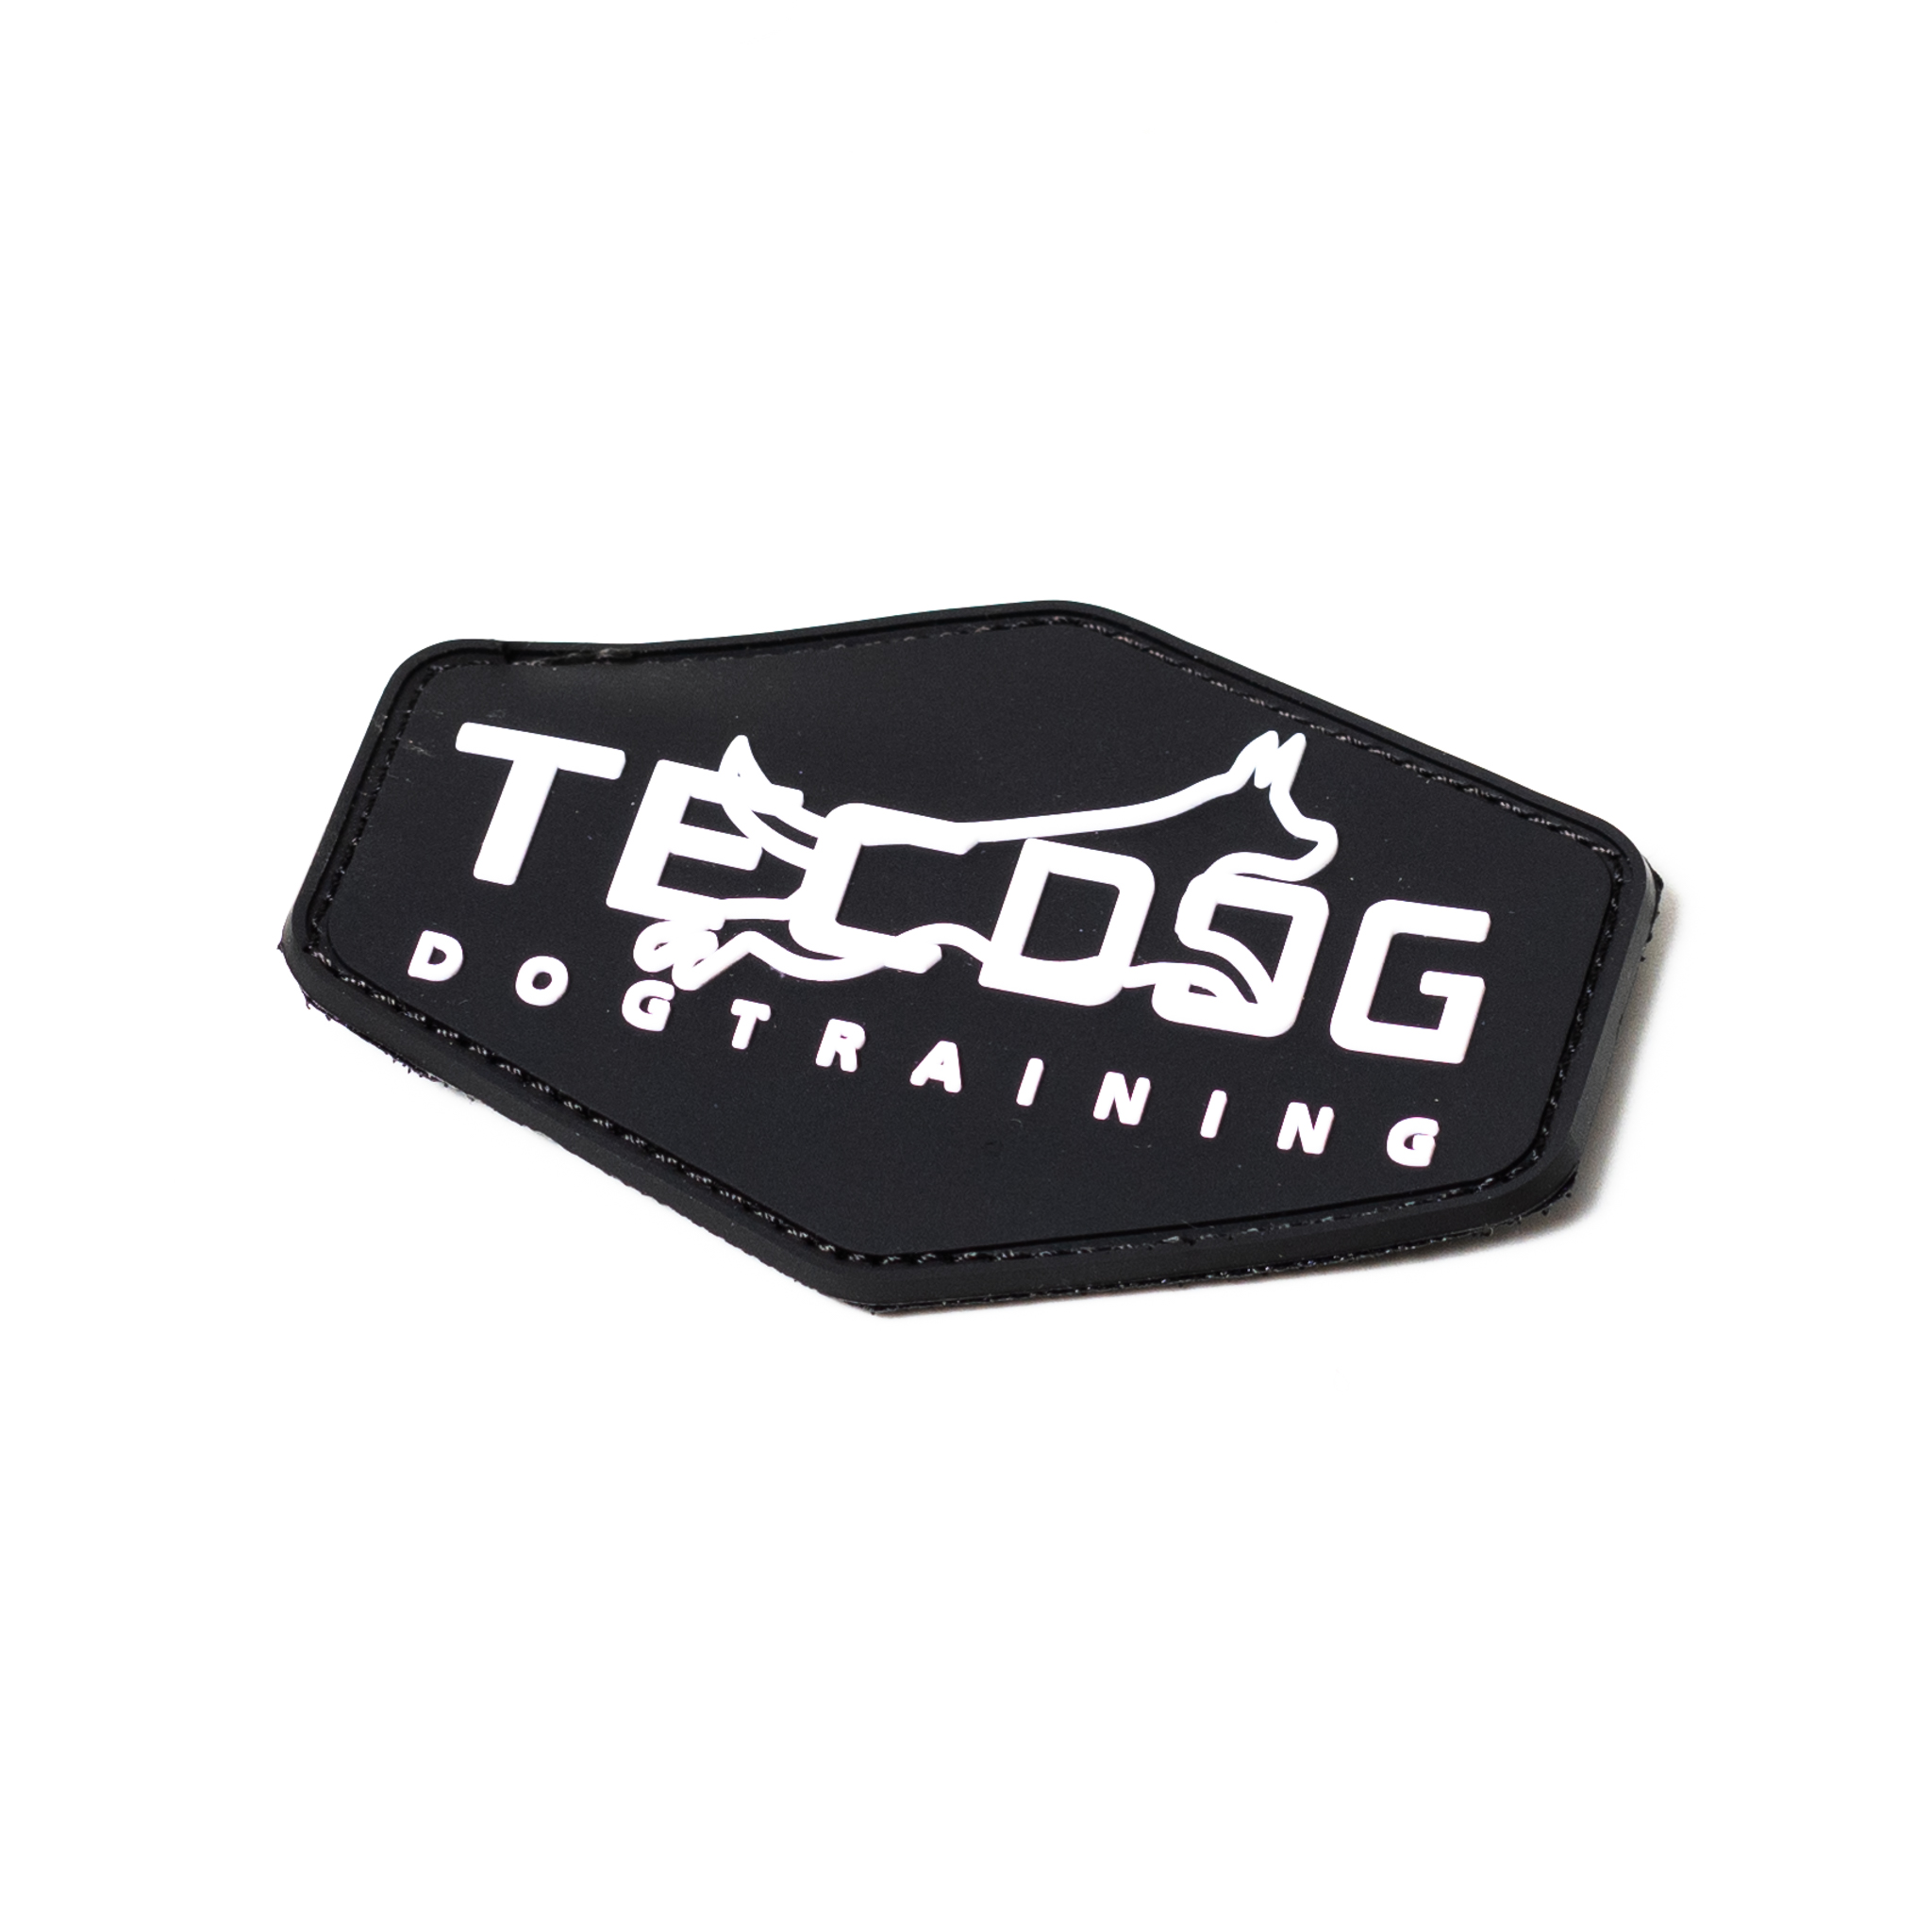 TECDOG Supporter Patch